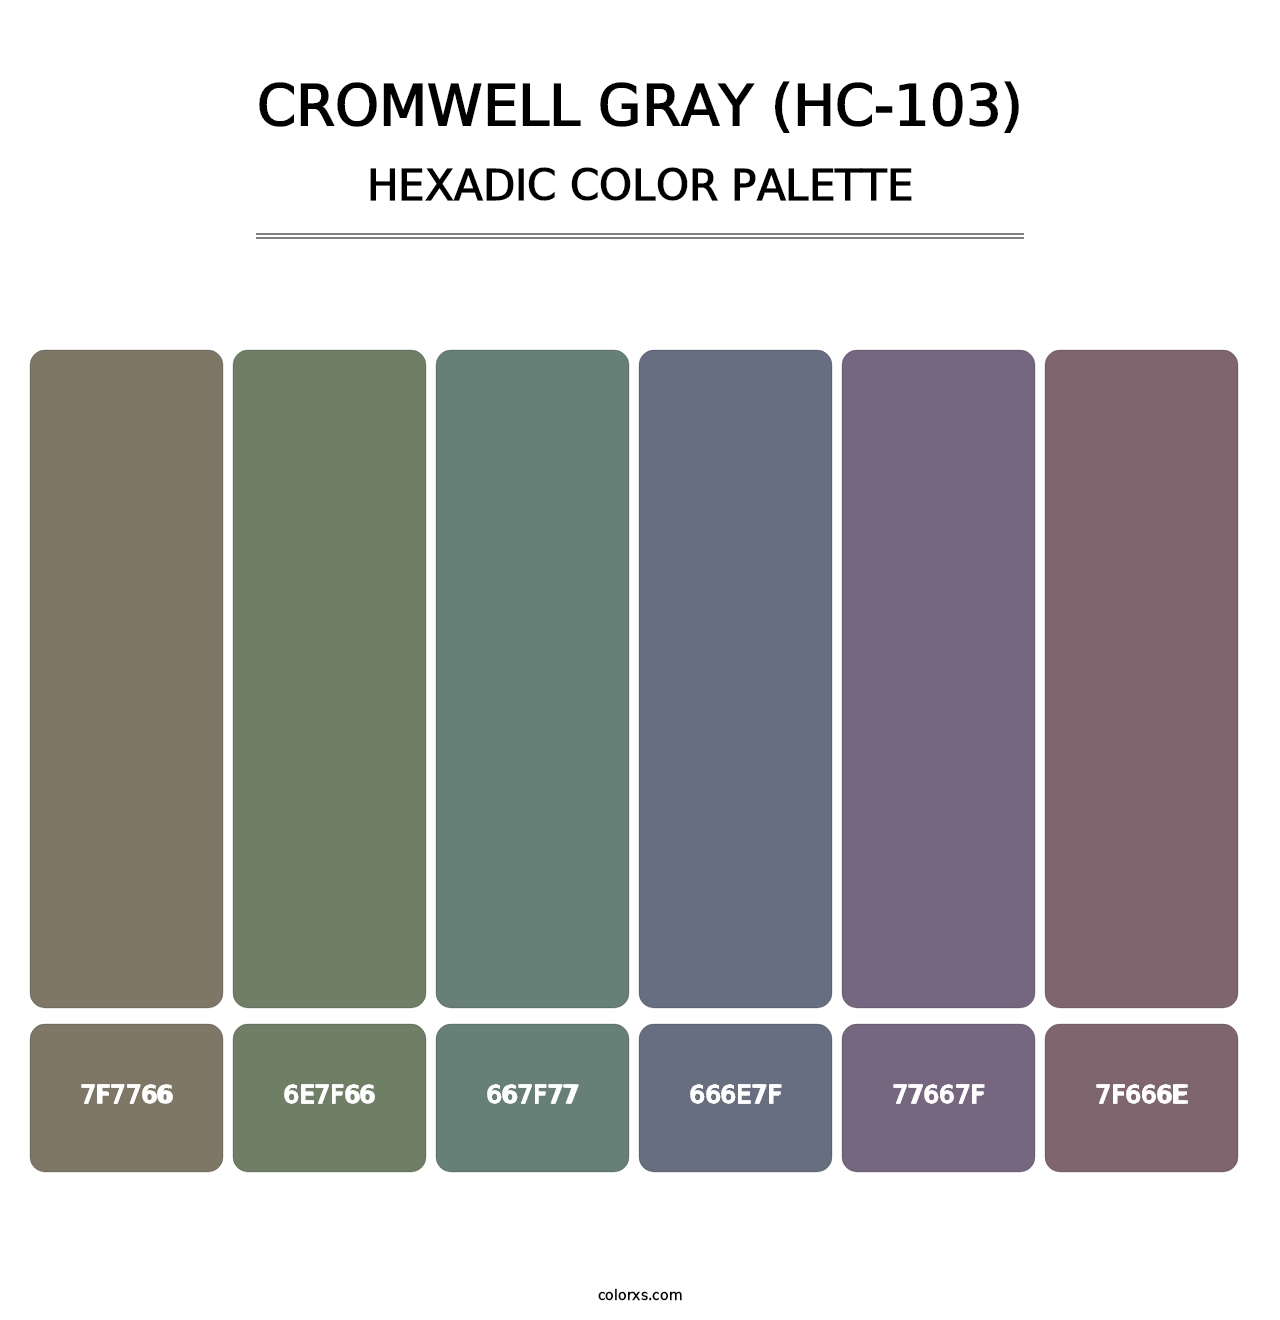 Cromwell Gray (HC-103) - Hexadic Color Palette